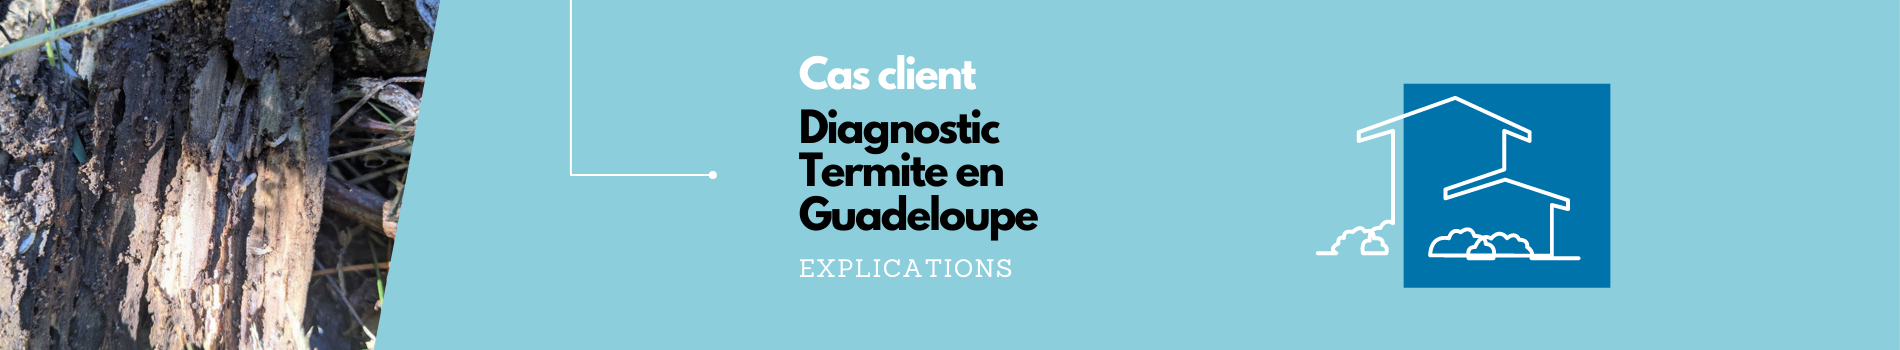 Diagnostic Termite en Guadeloupe